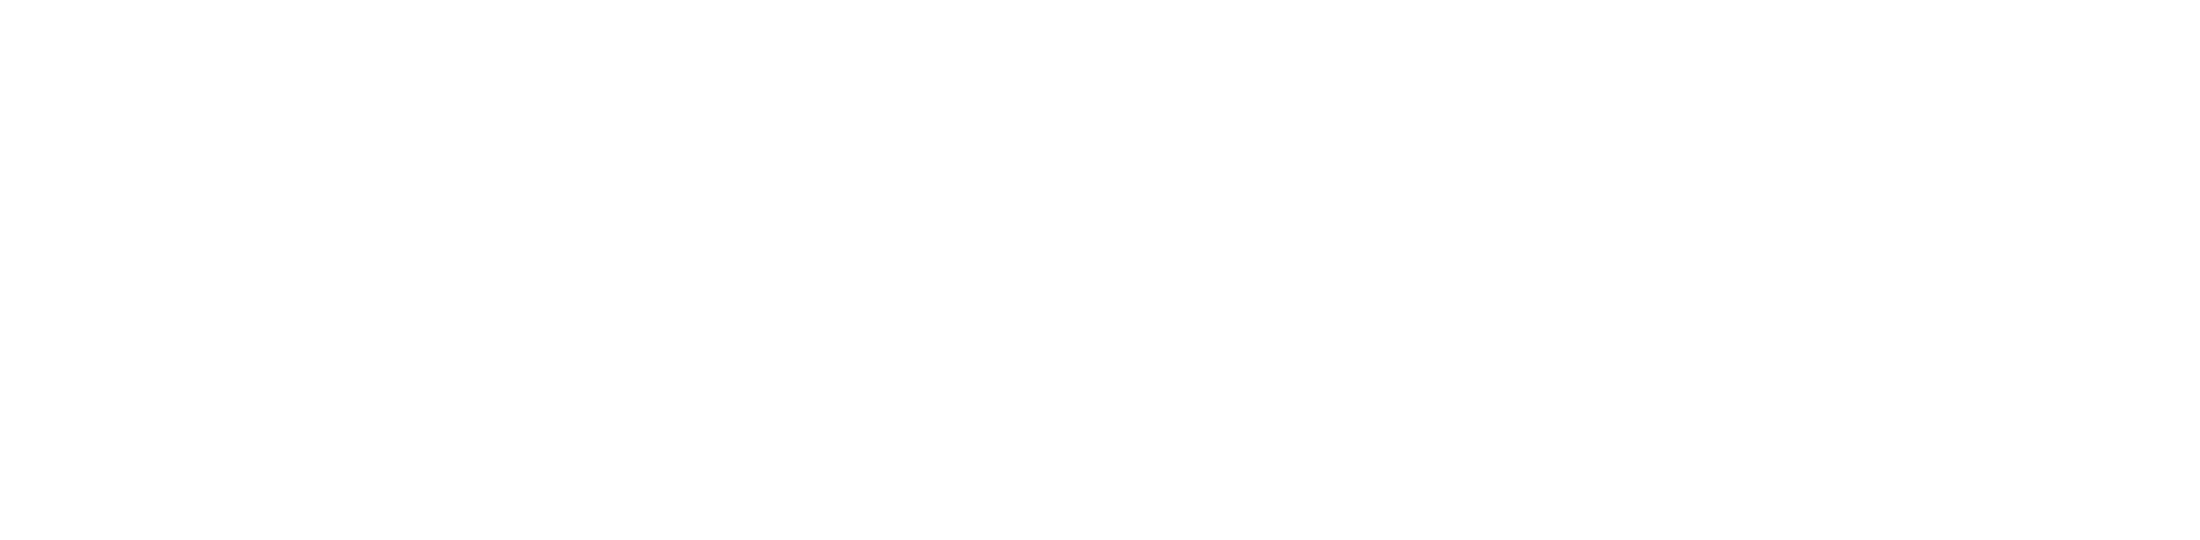 Alton Towers Christmas Lodges